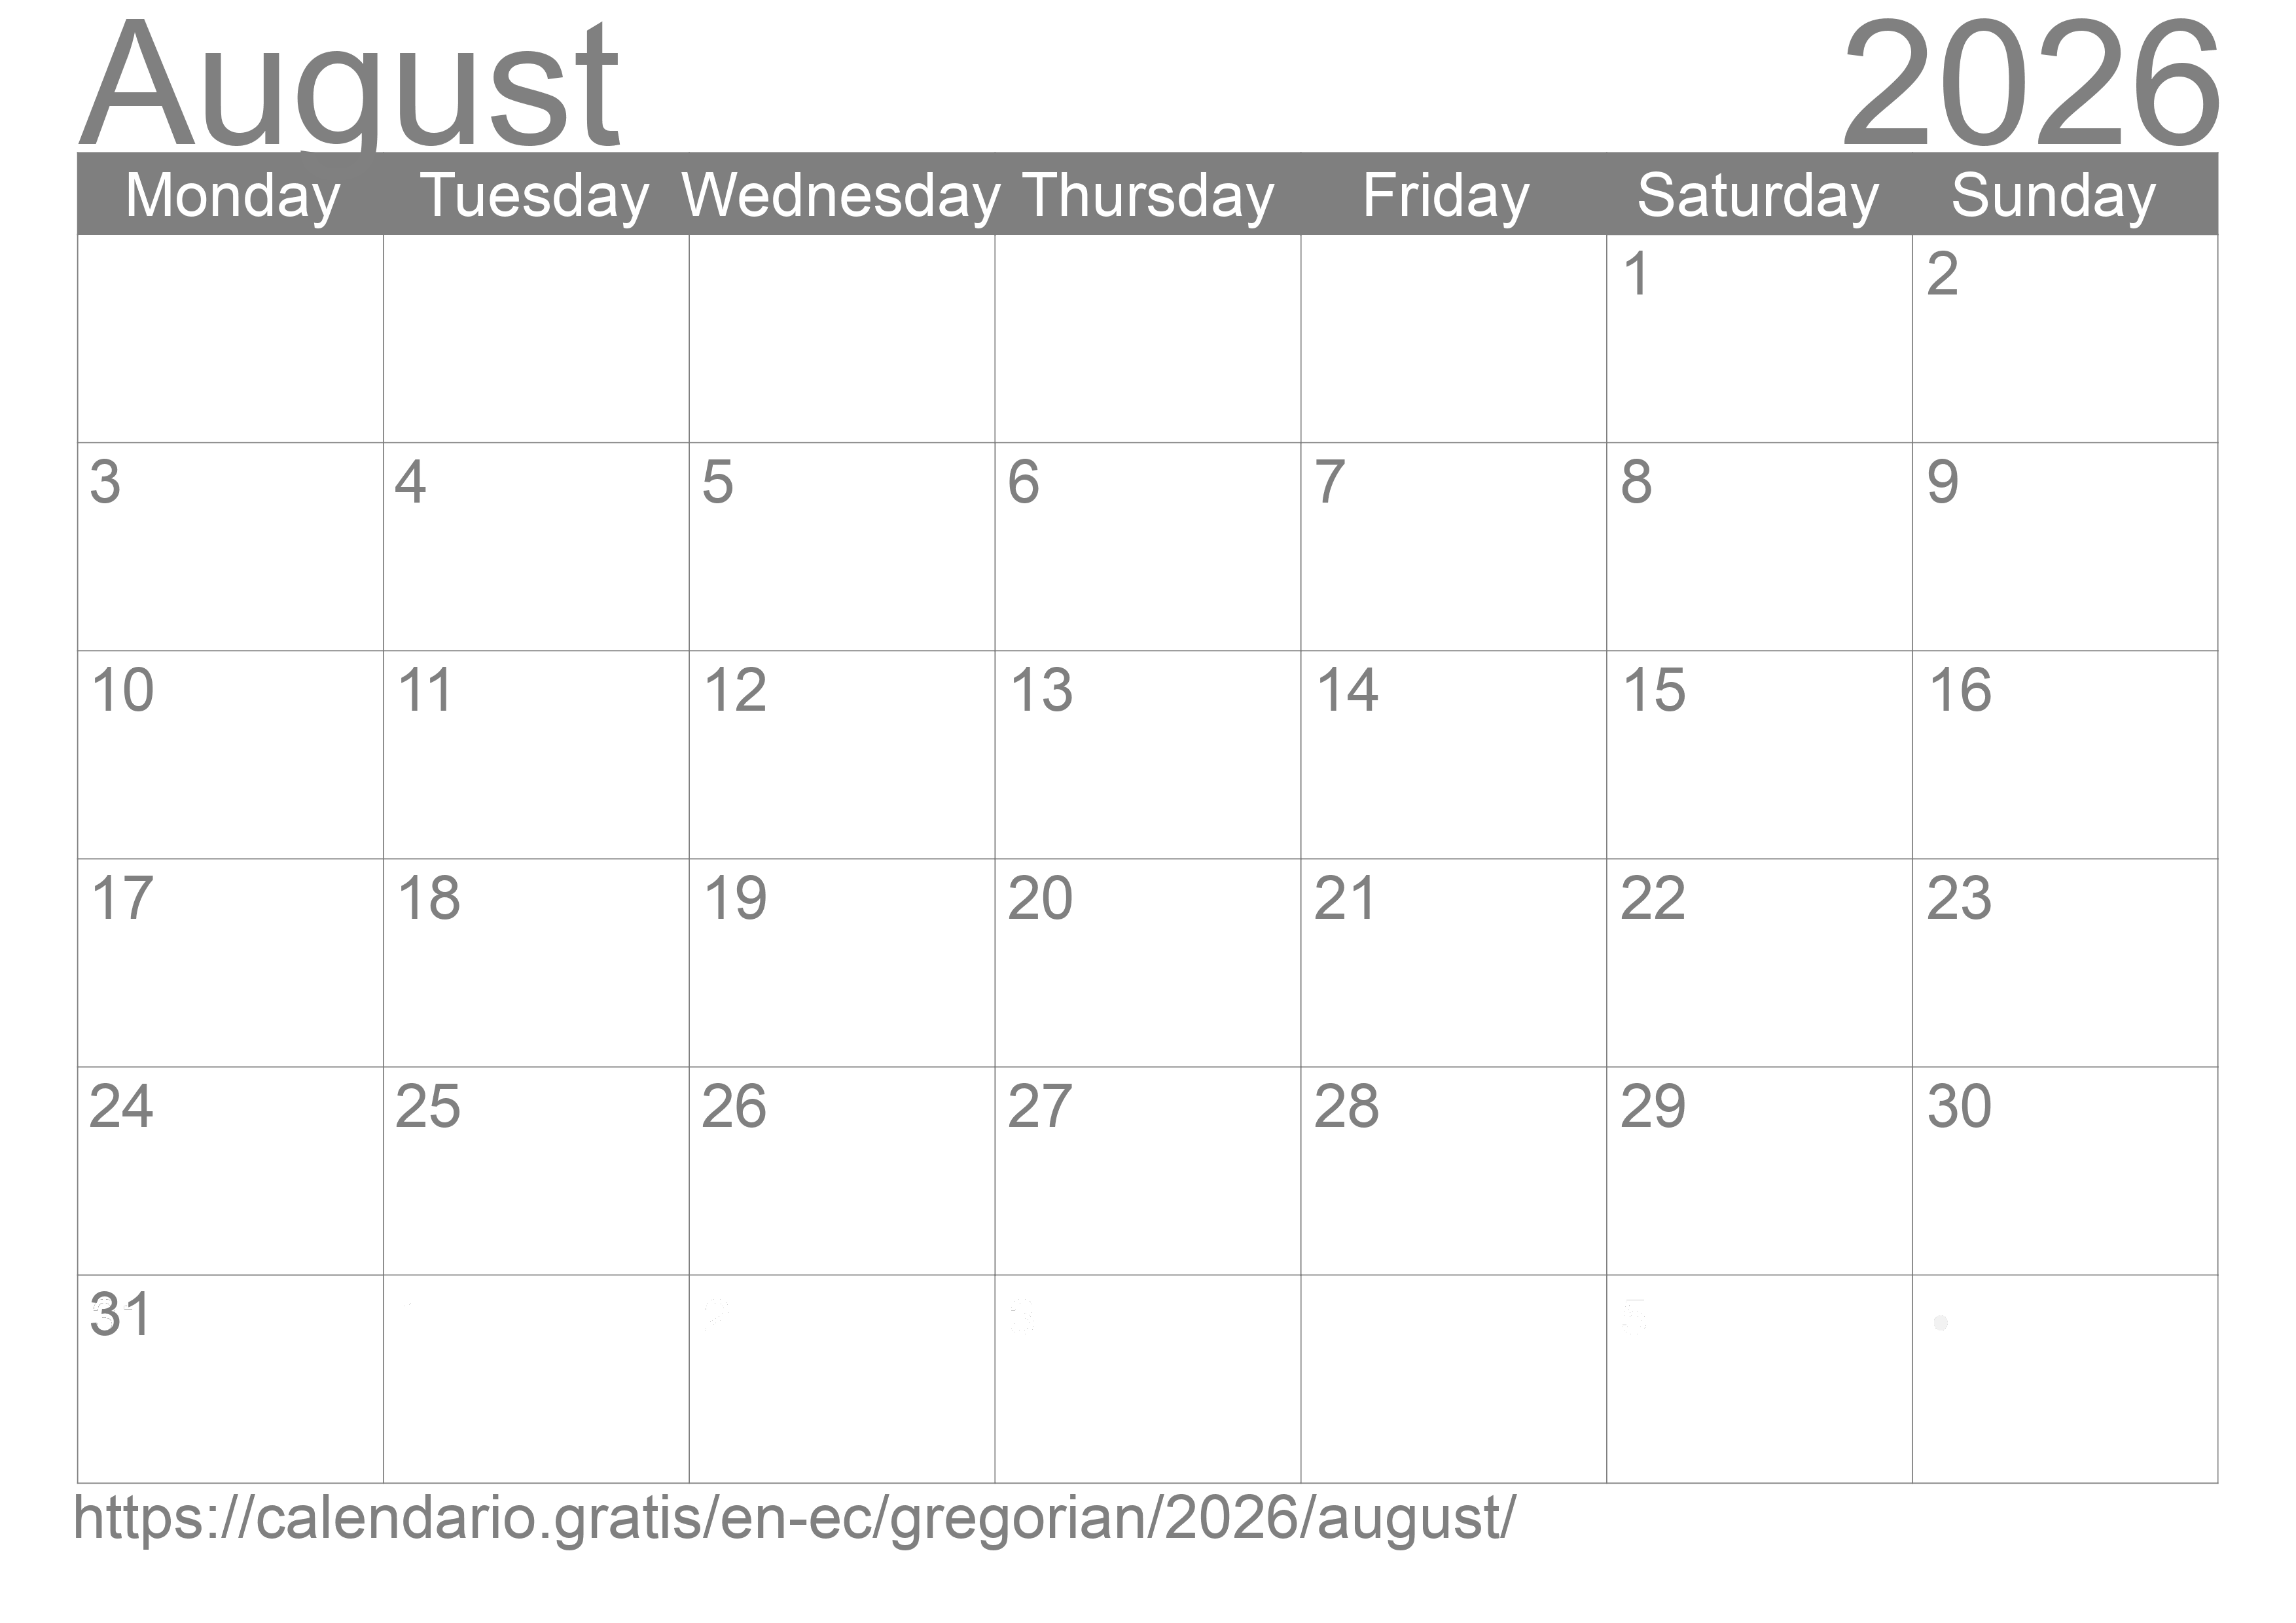 Calendar August 2026 to print